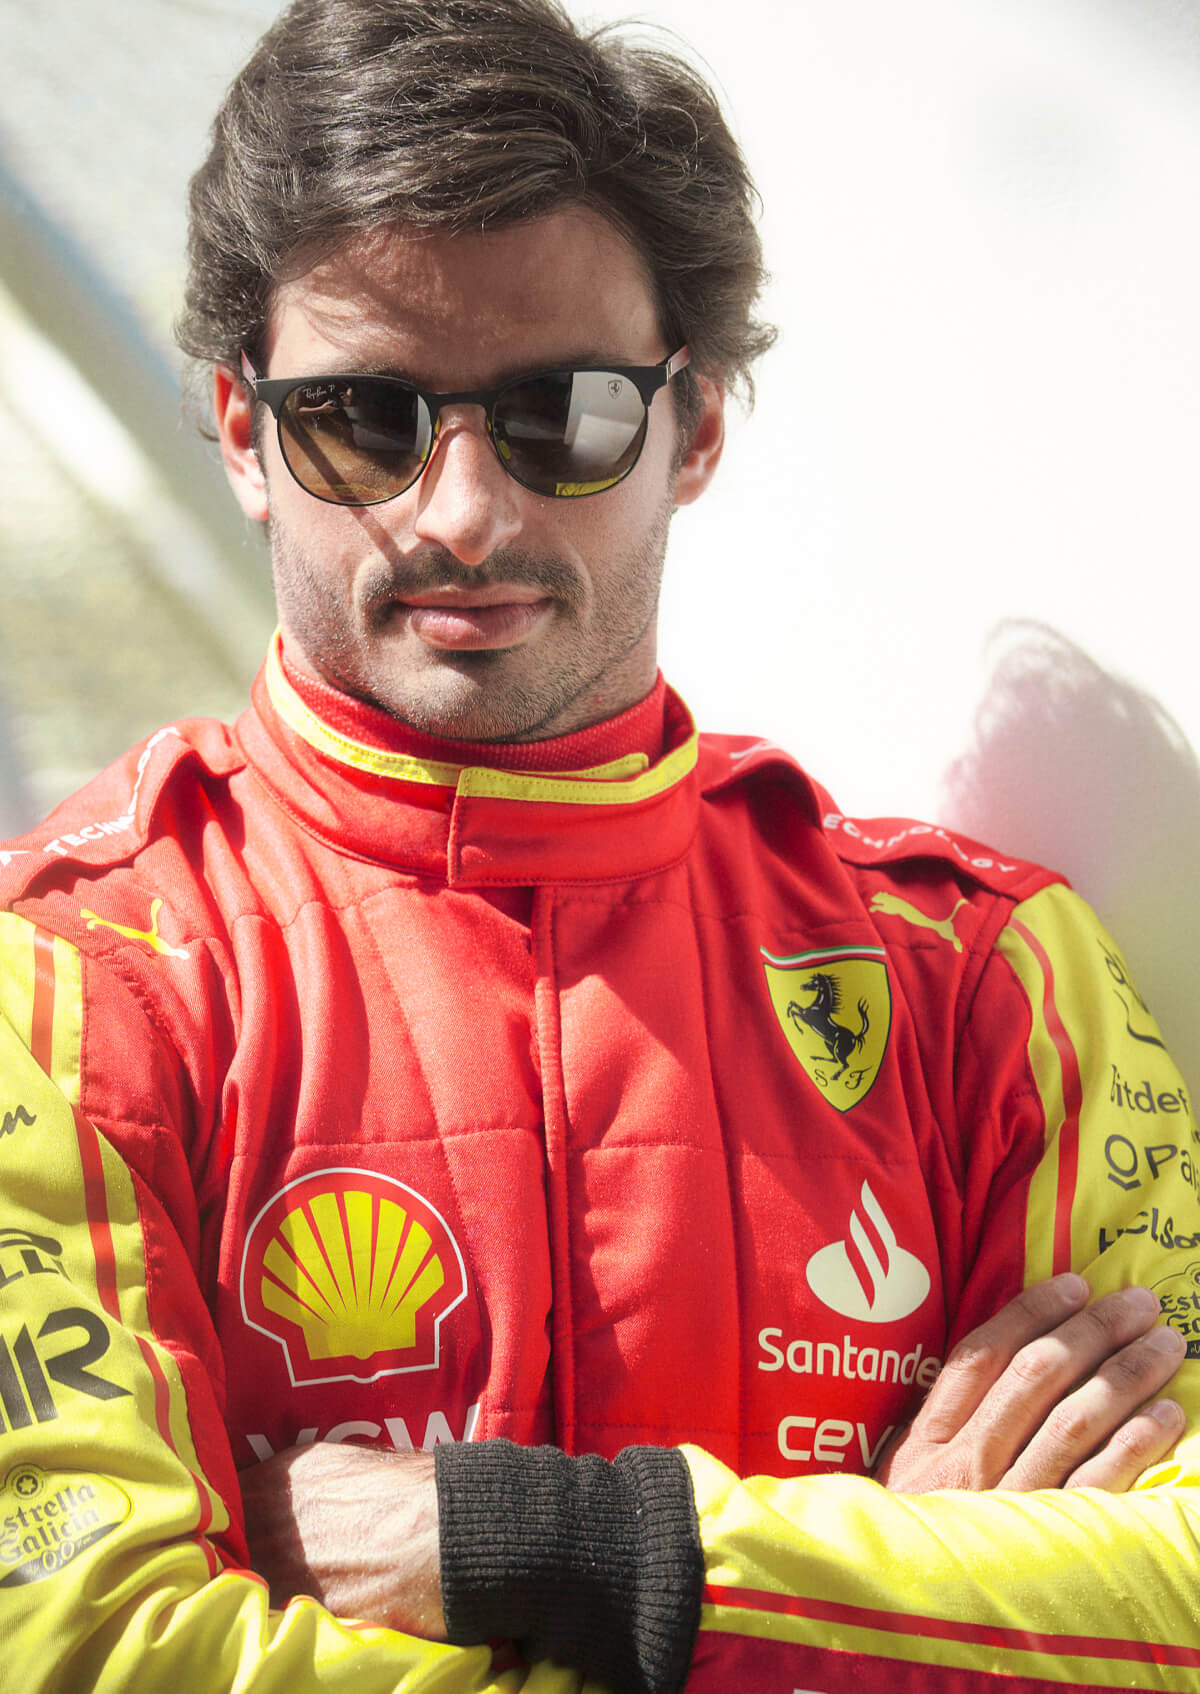 Ray-Ban for Scuderia Ferrari Panthos sunglasses